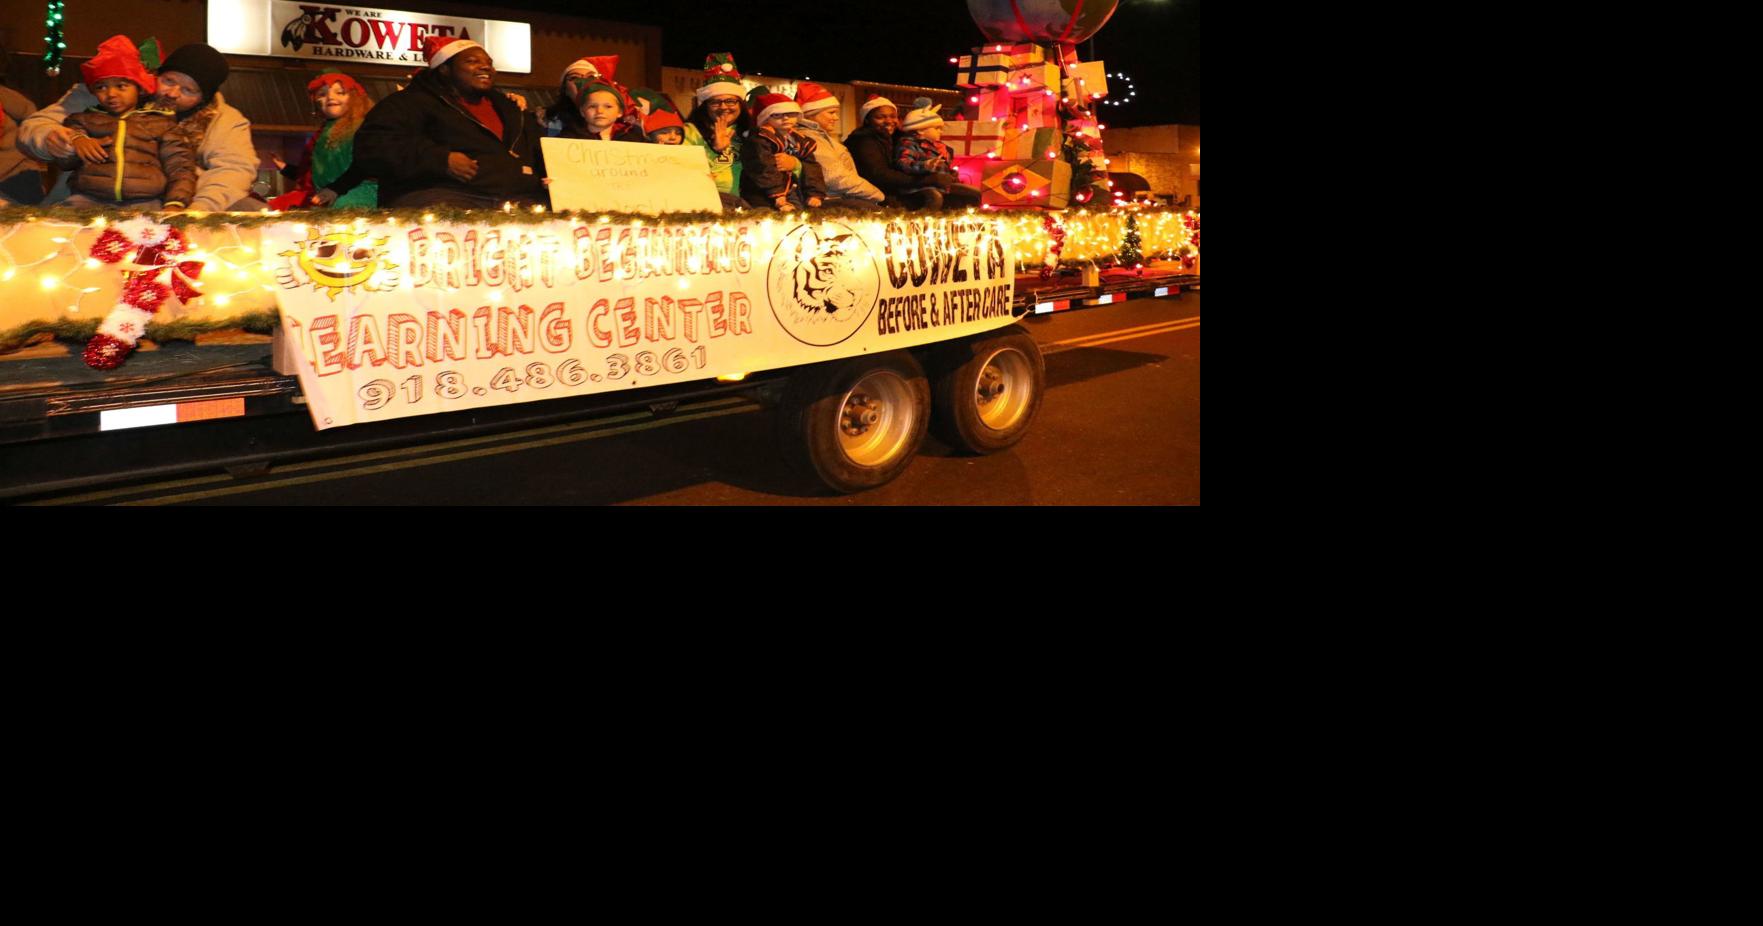 SOS Coweta Christmas parade needs entries to avoid cancellation News